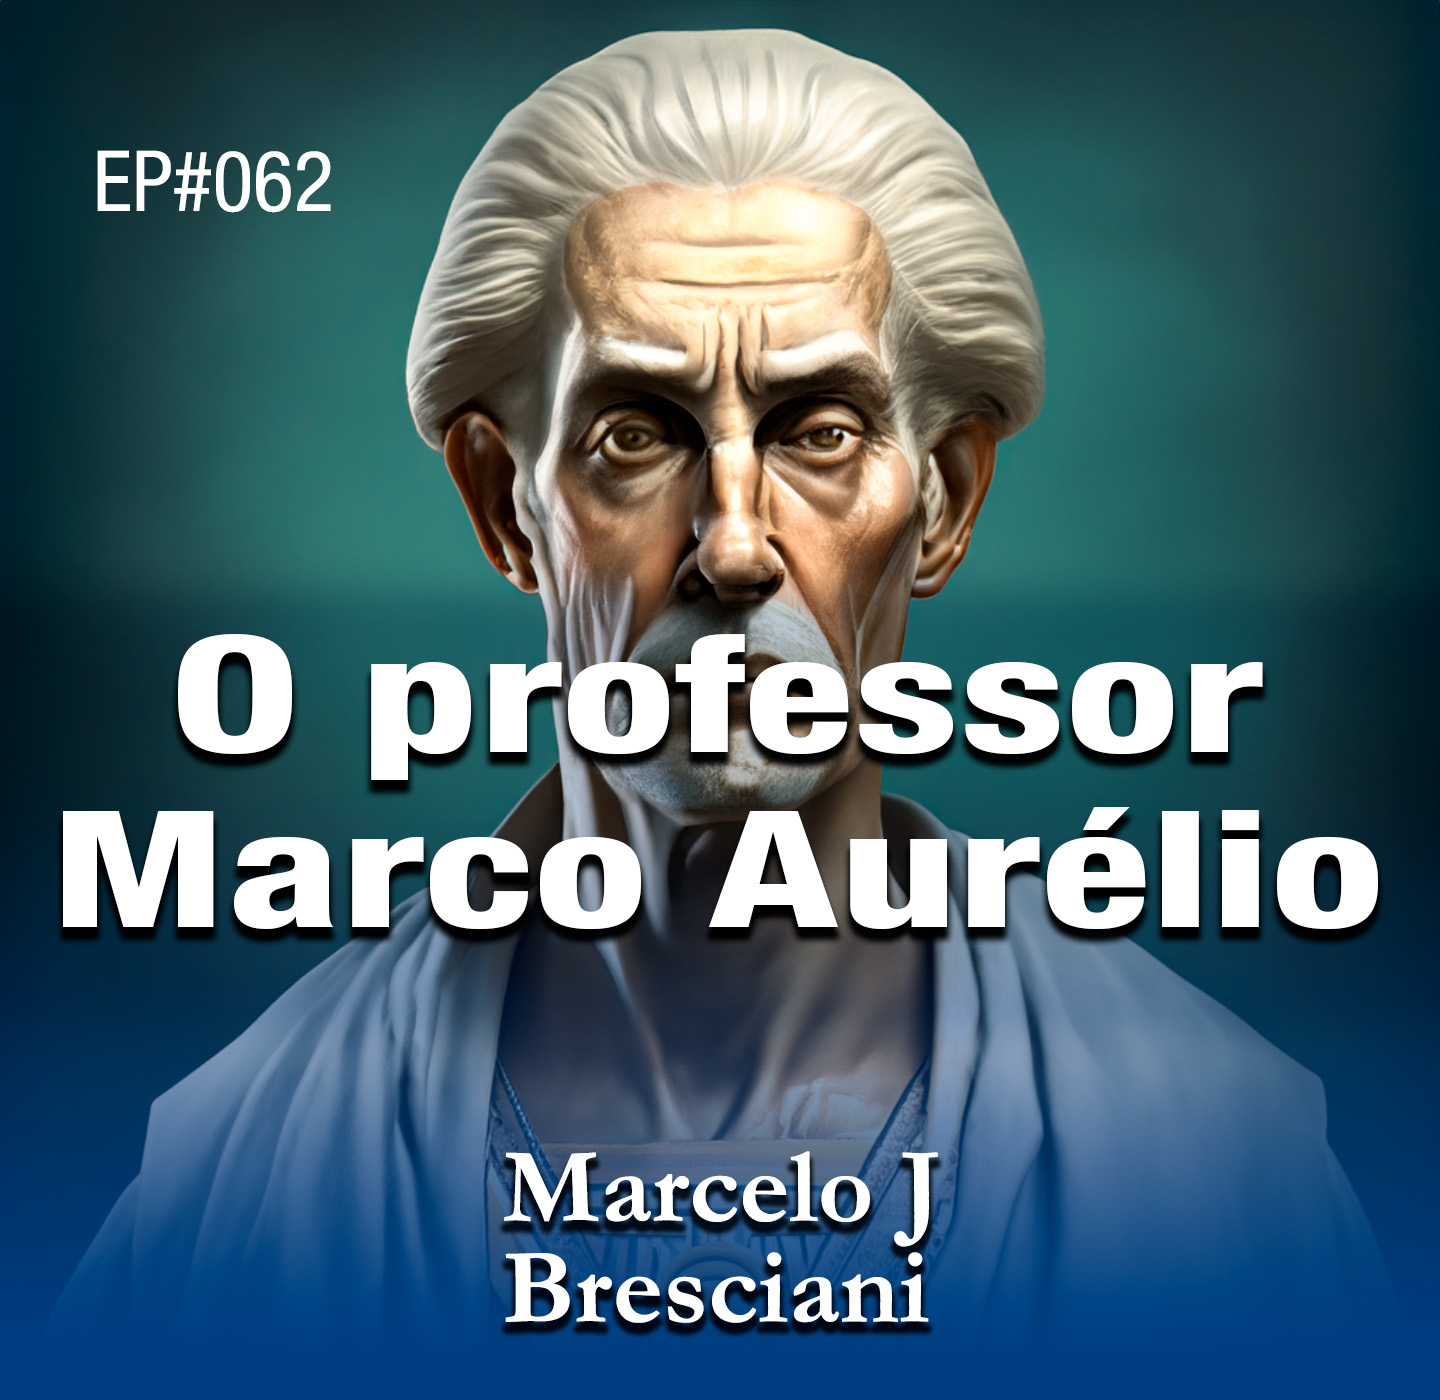 O professor Marco Aurélio